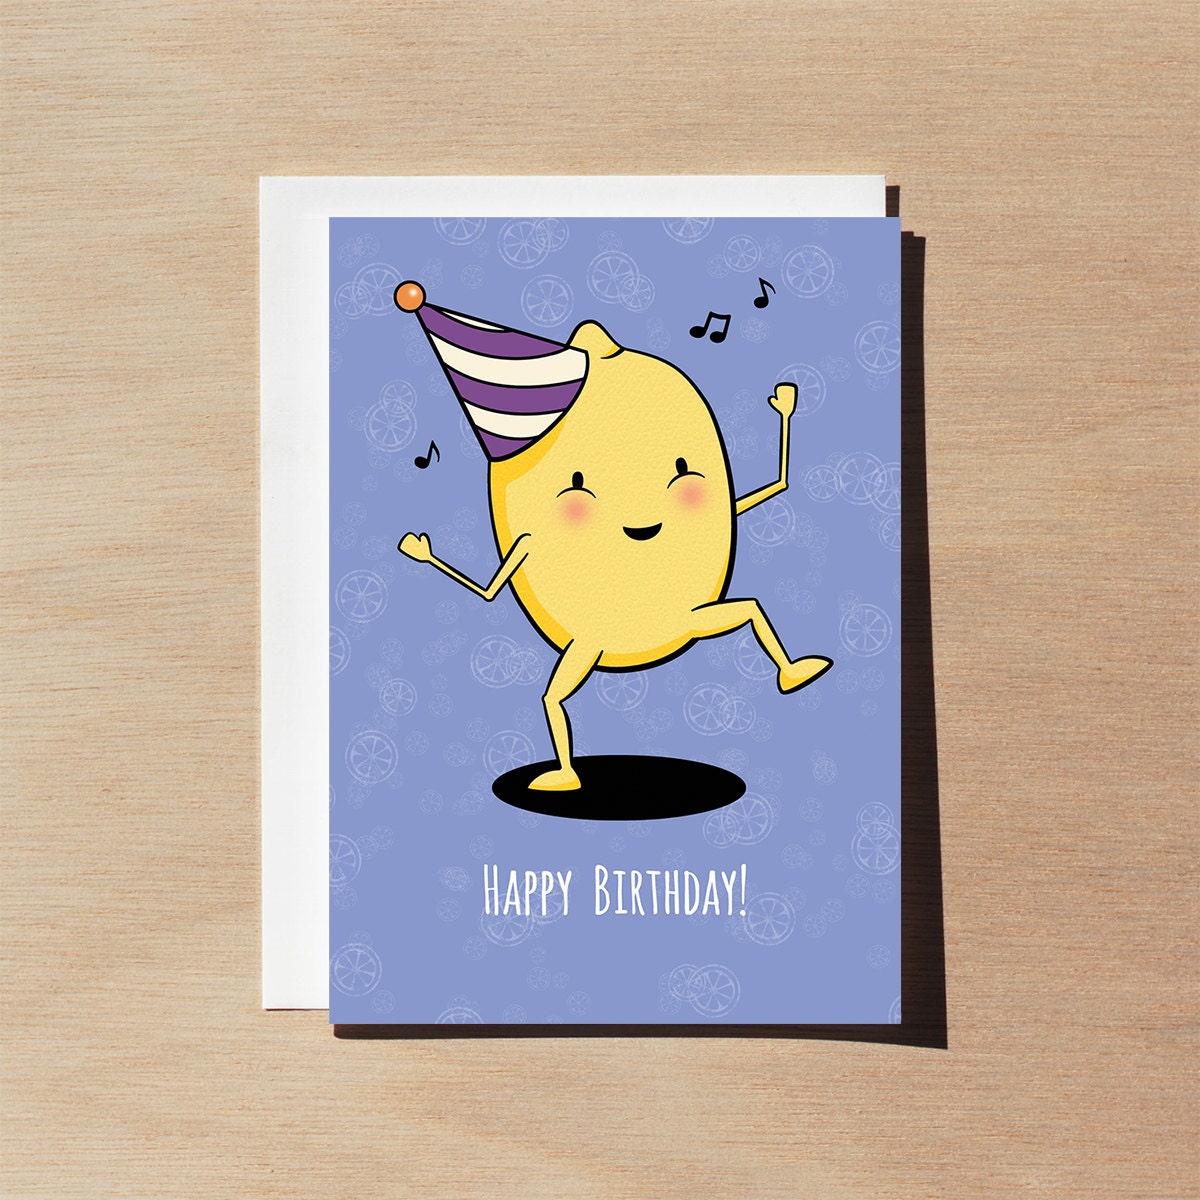 Happy Birthday funny rude Lemon Party meme birthday card ...